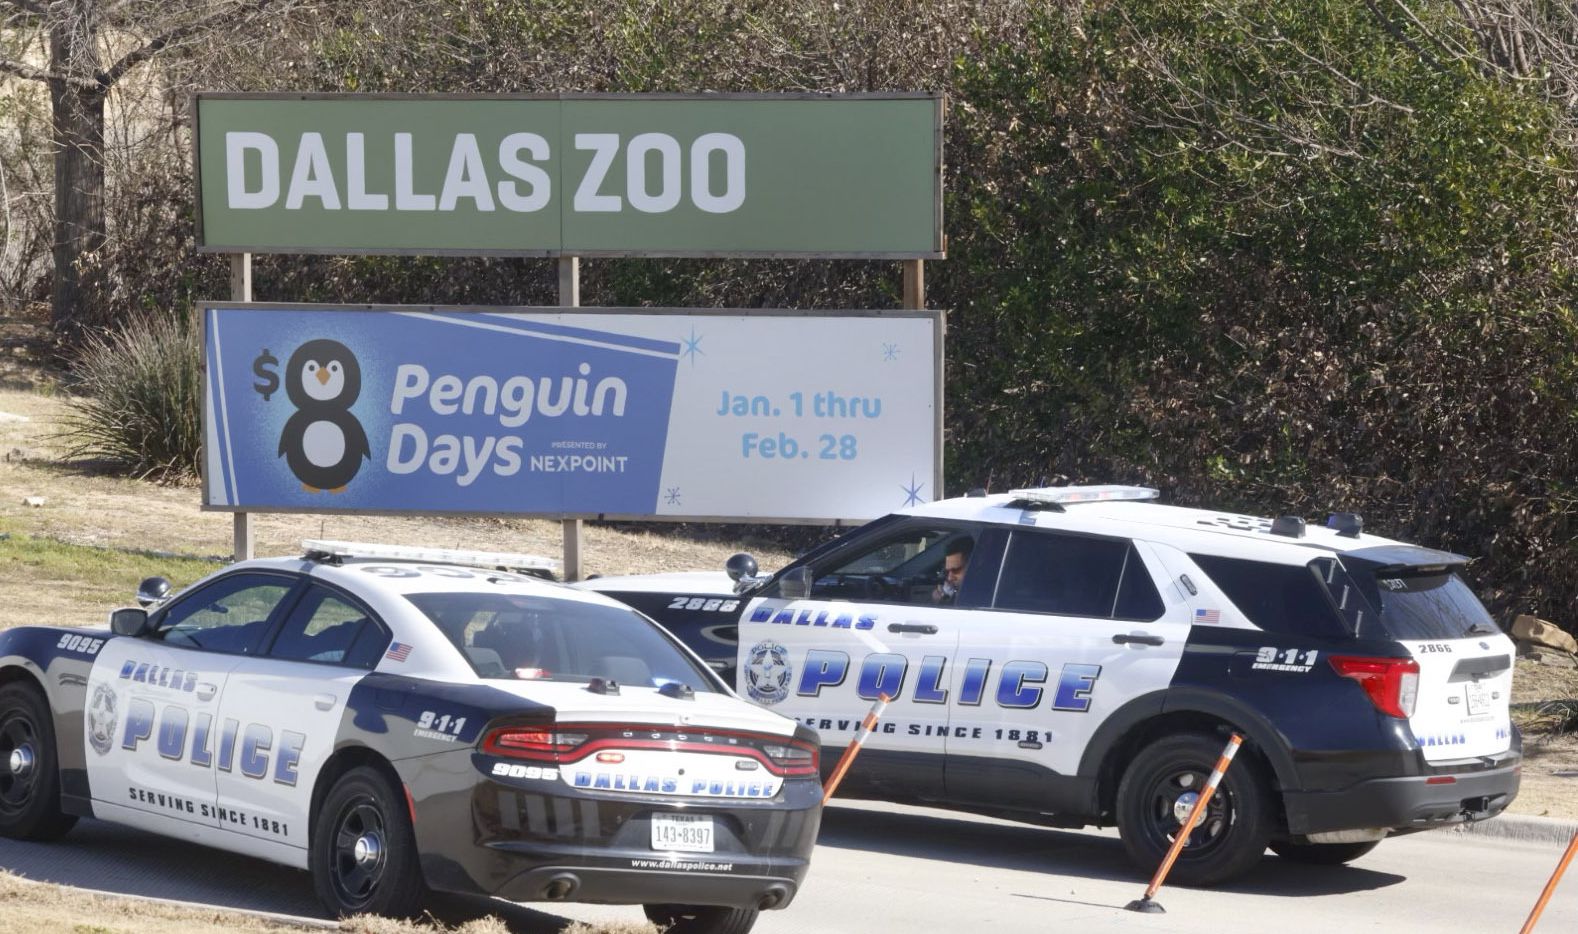 Dallas police vehicles sit at an entrance at the Dallas Zoo on Jan. 13.